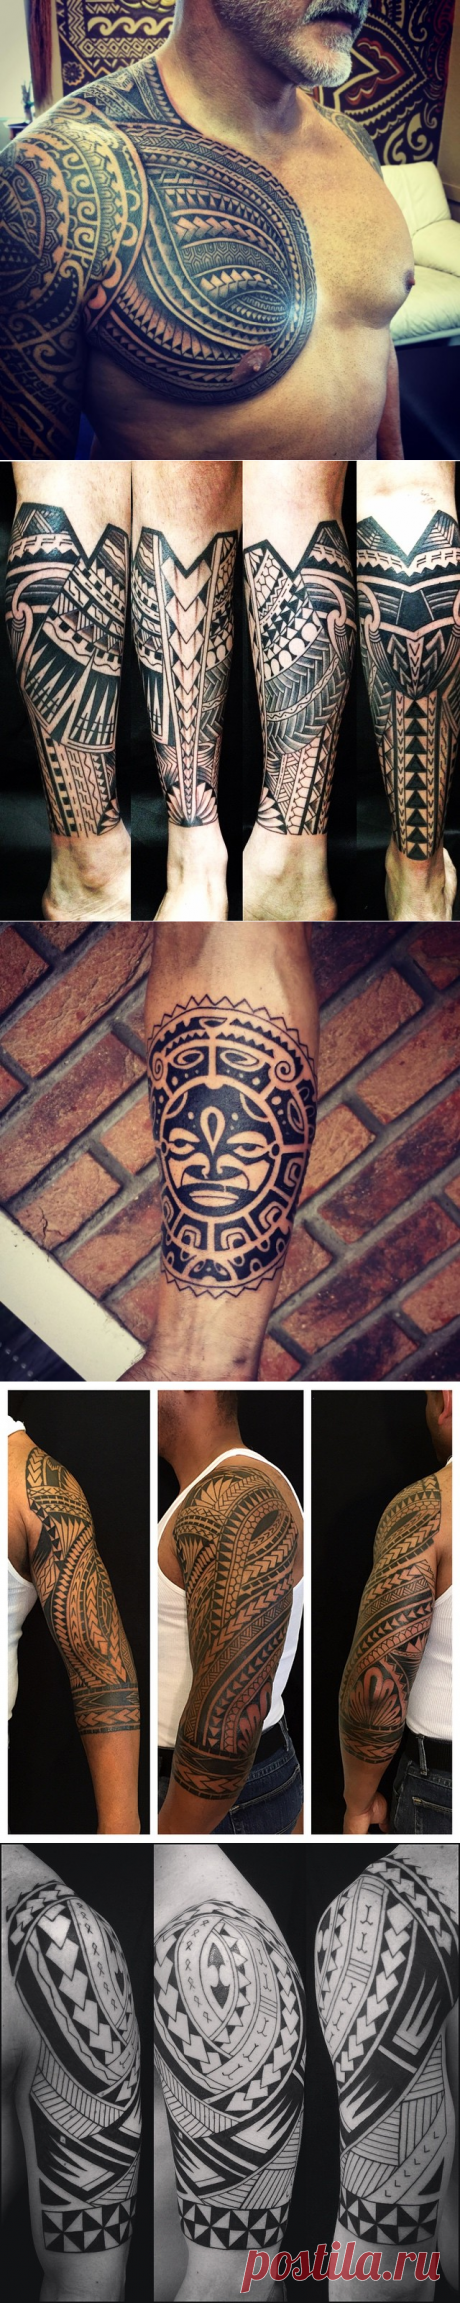 35 Best Samoan Tattoo Designs - Amazing Tribal Patterns